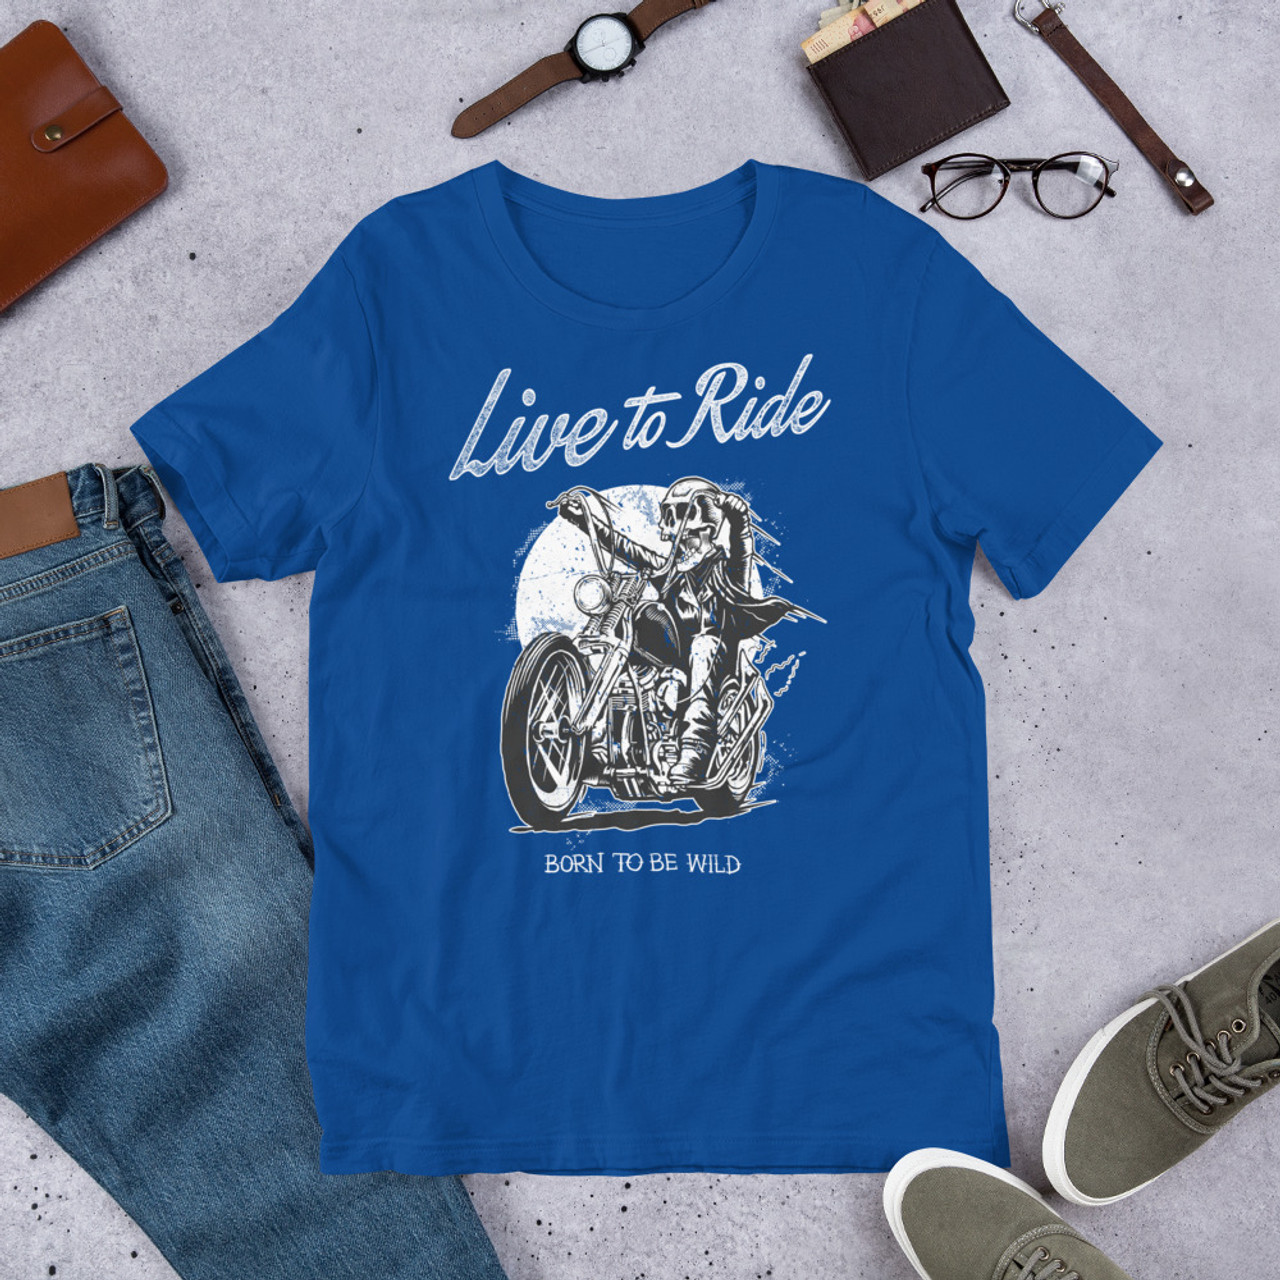 true royal  t shirt live to ride